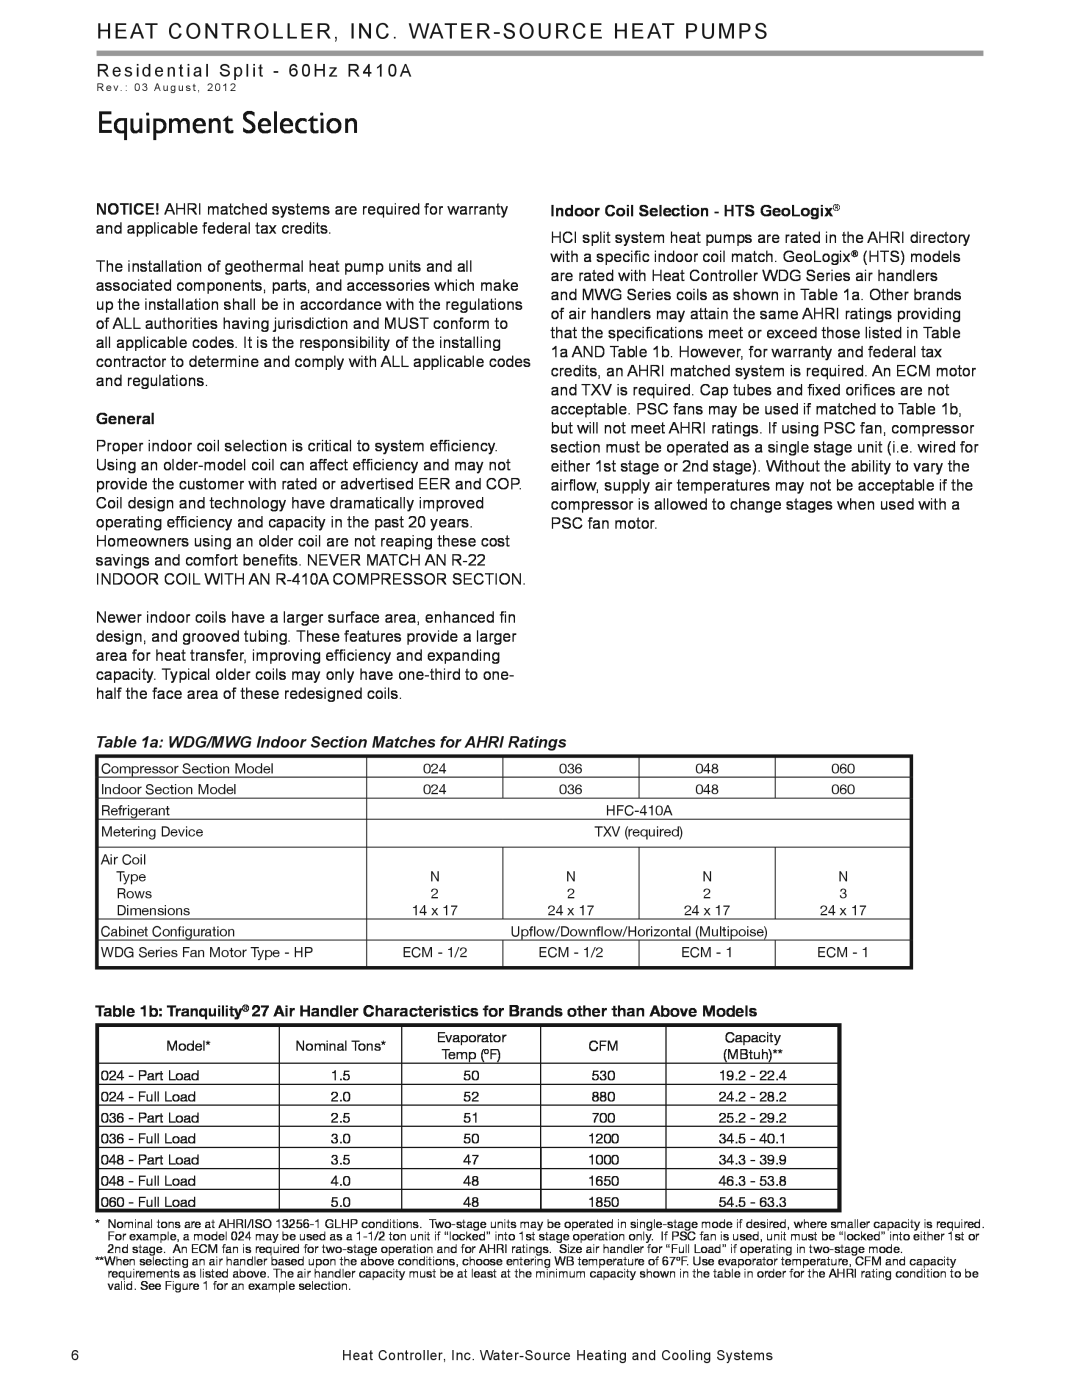 Heat Controller HTS SERIES manual Equipment Selection, Heat Controller, Inc. Water-Sourceheat Pumps, General 